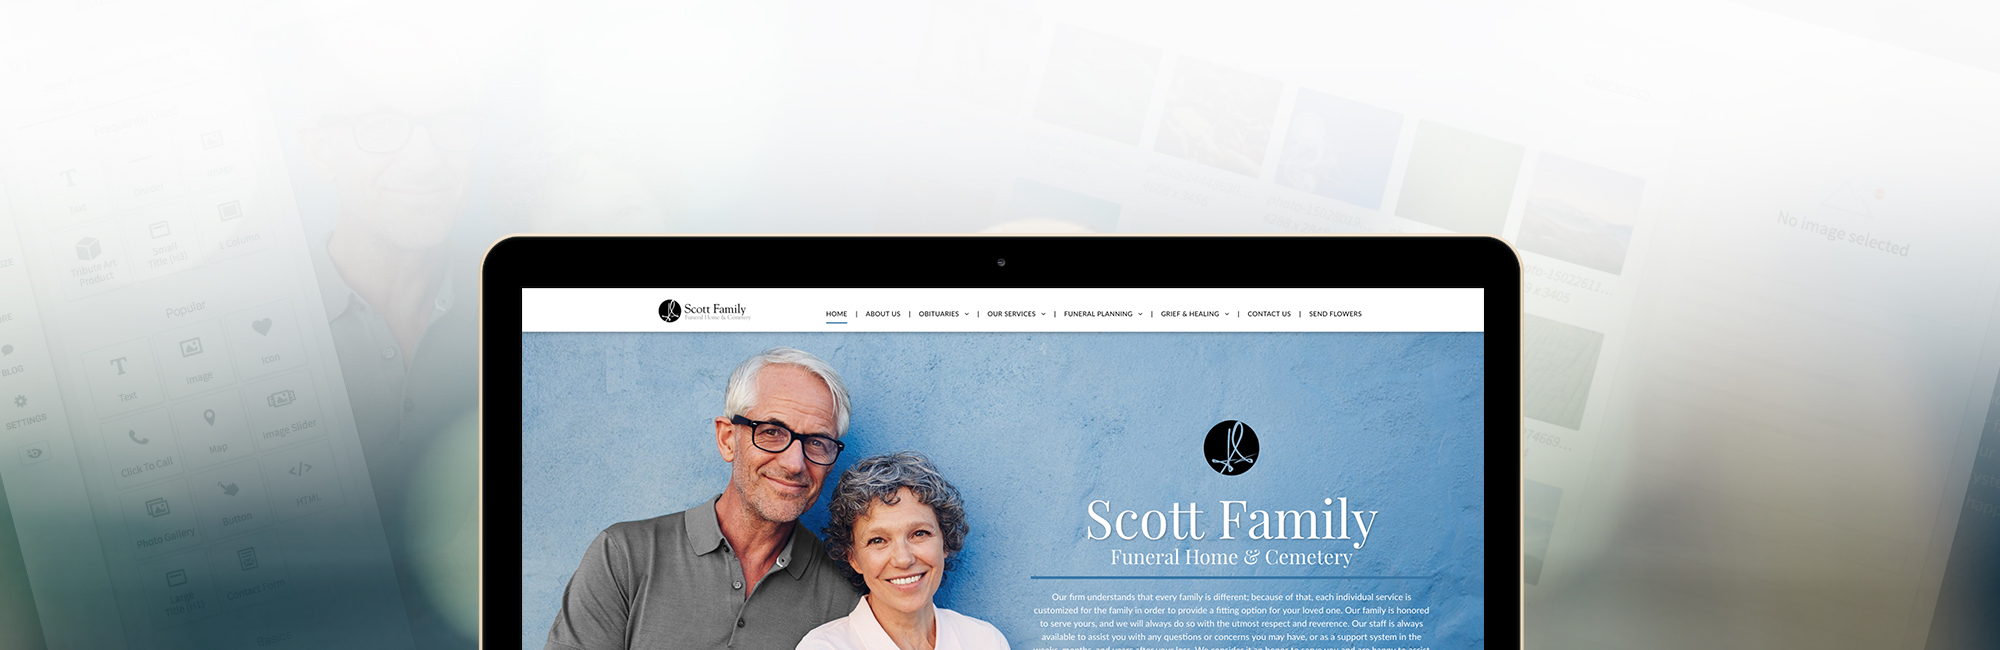 FrontRunner Funeral Home Websites